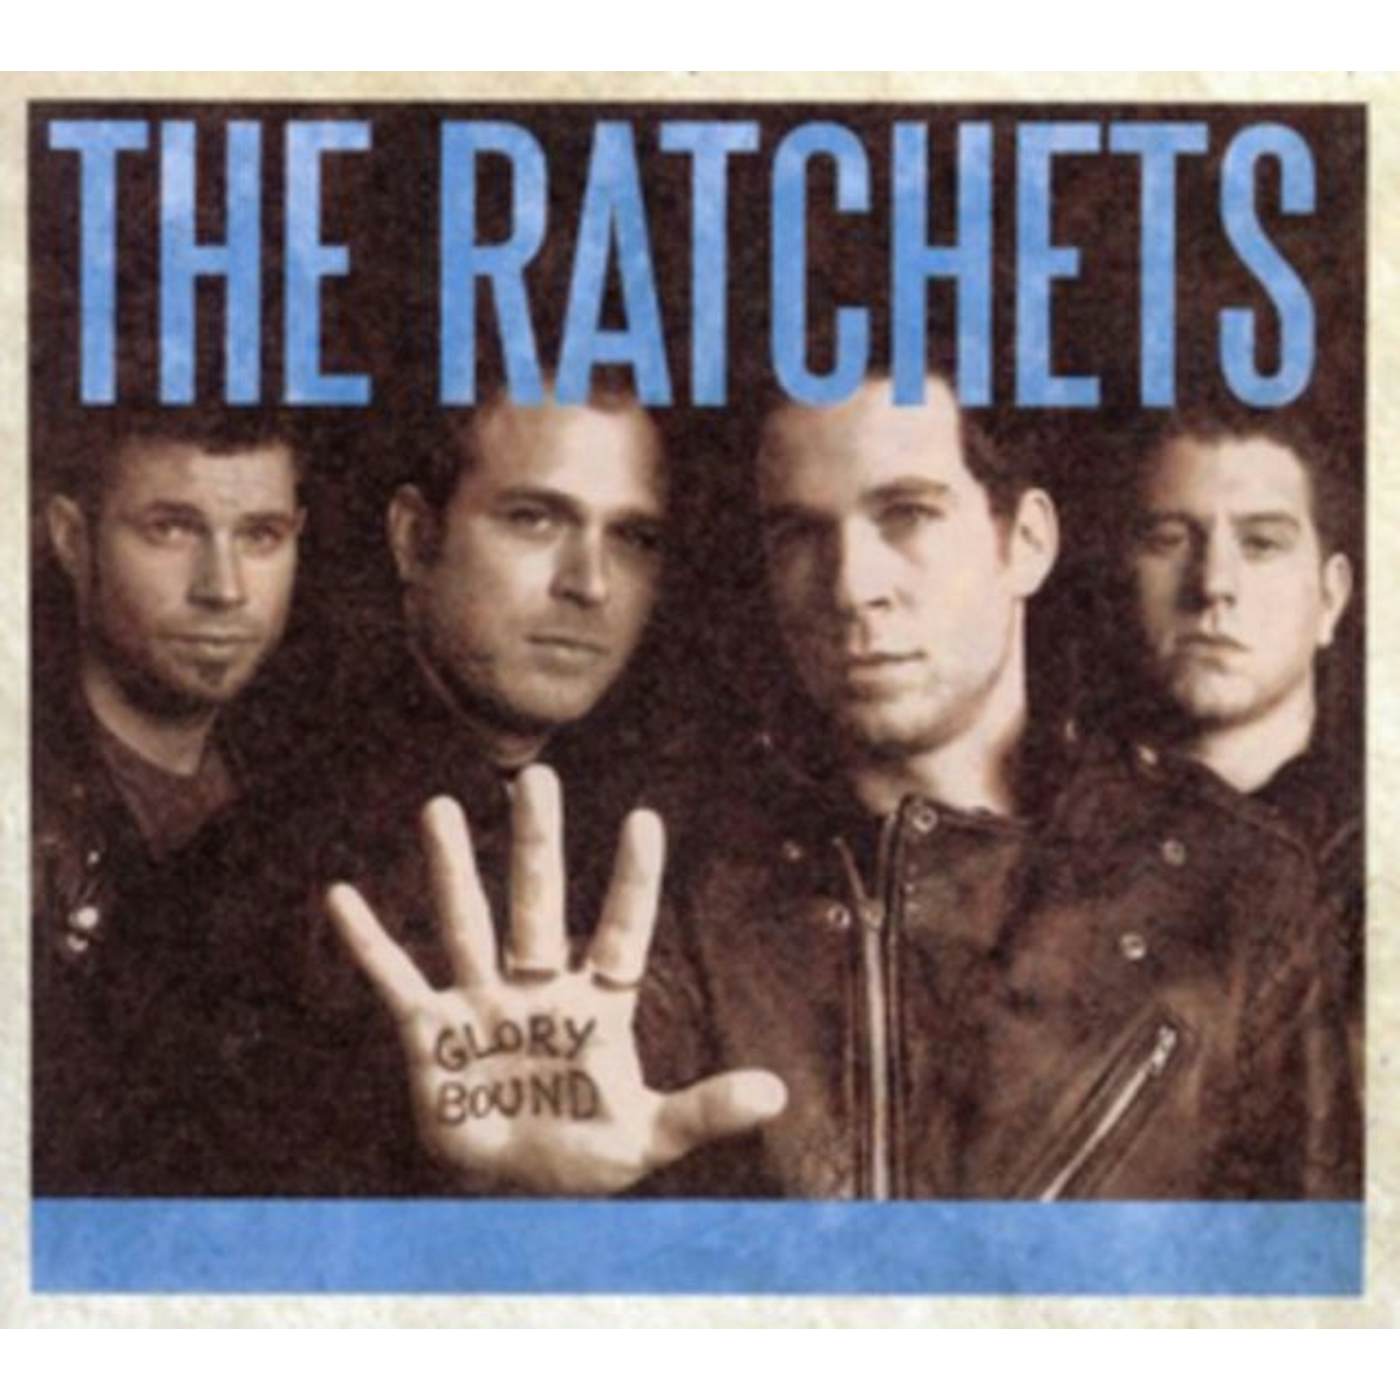 The Ratchets LP - Glory Bound (Electric Blue Vinyl)